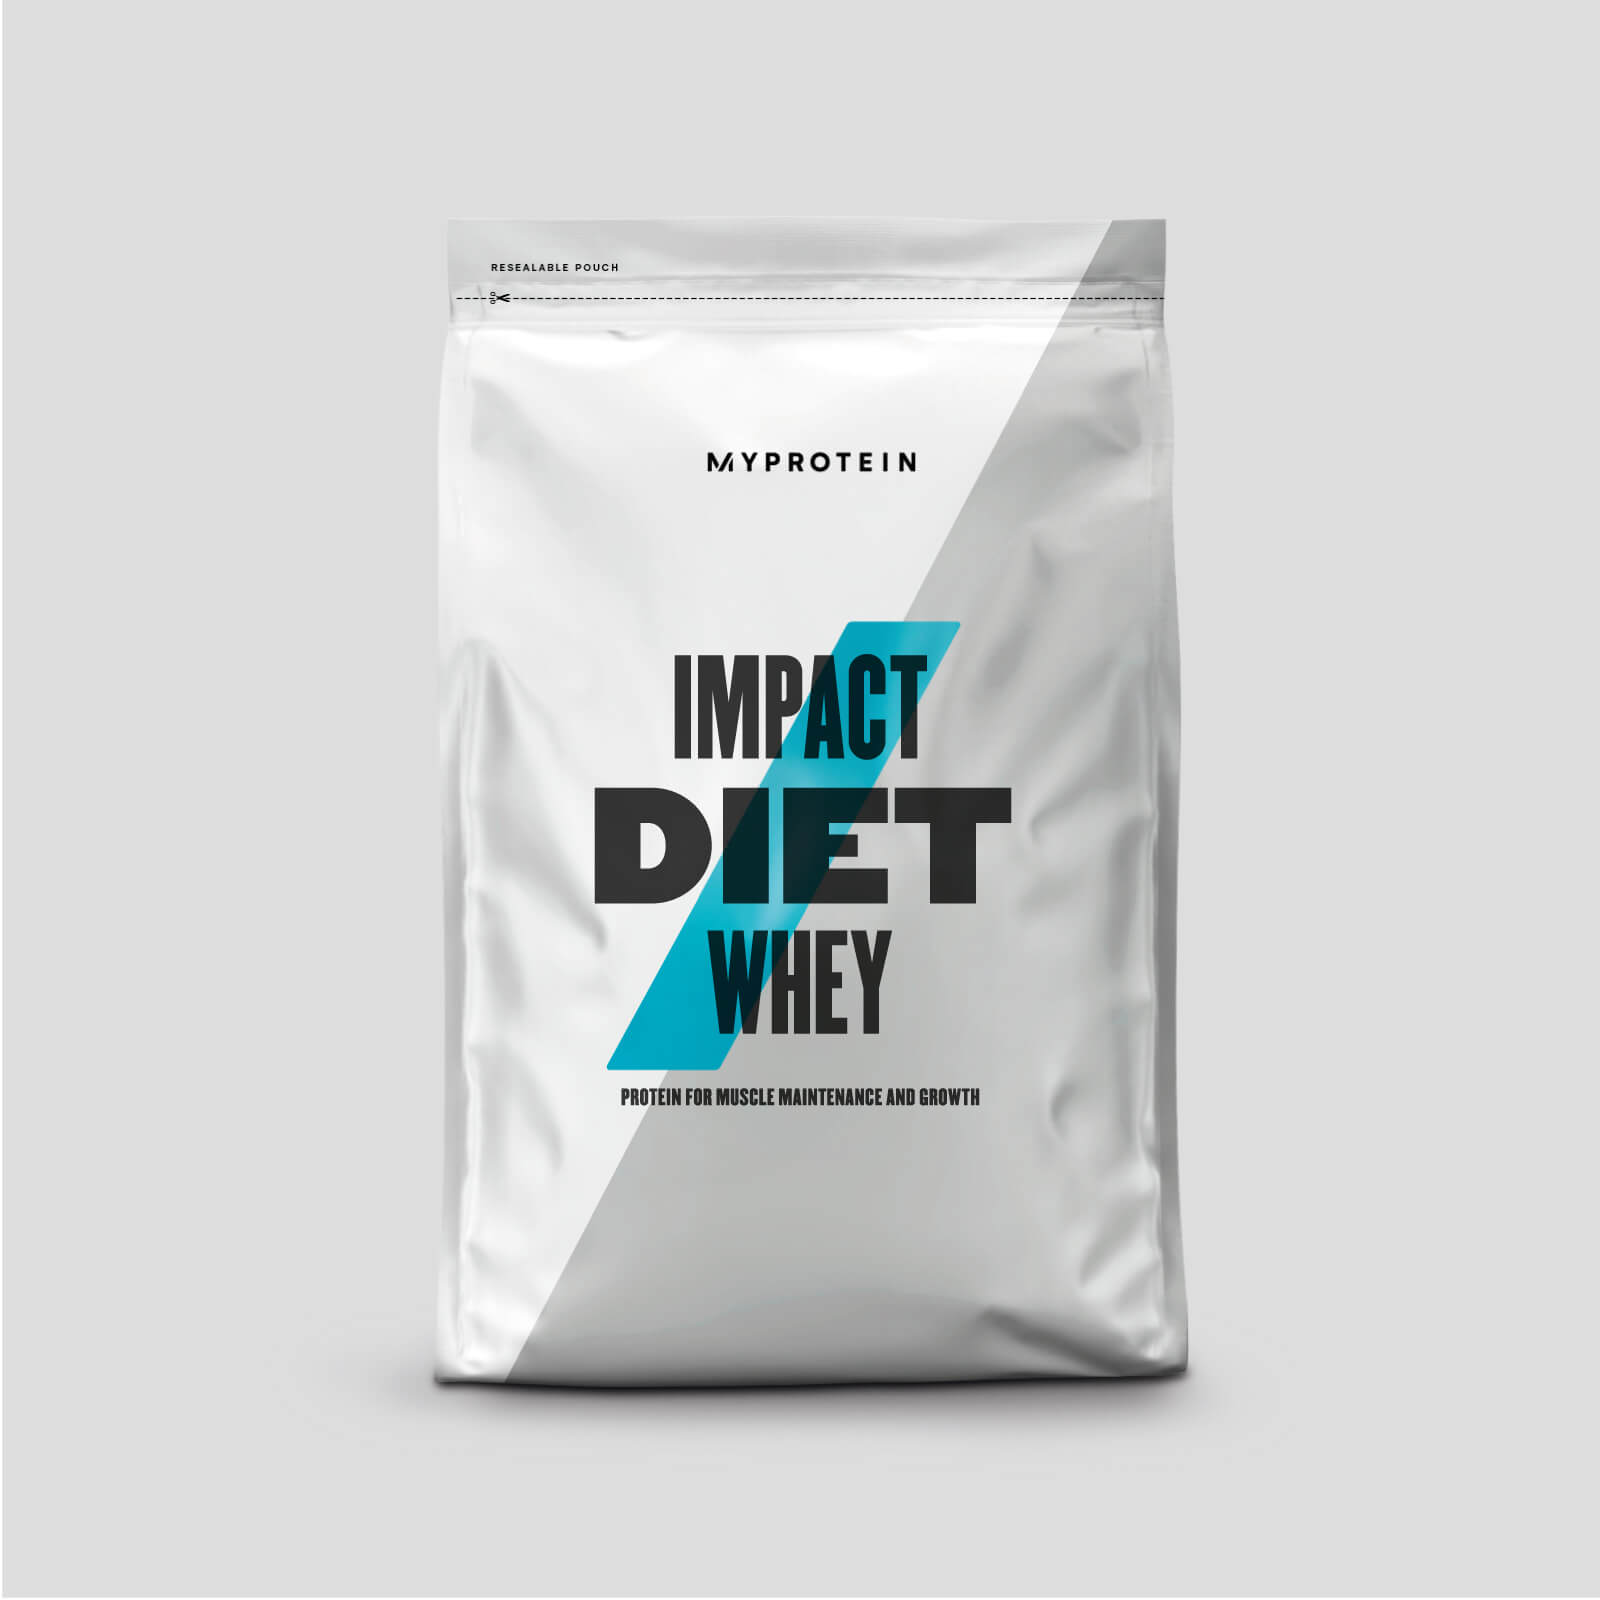 Impact Diet Whey - 250g - Chocolate e menta (stevia)